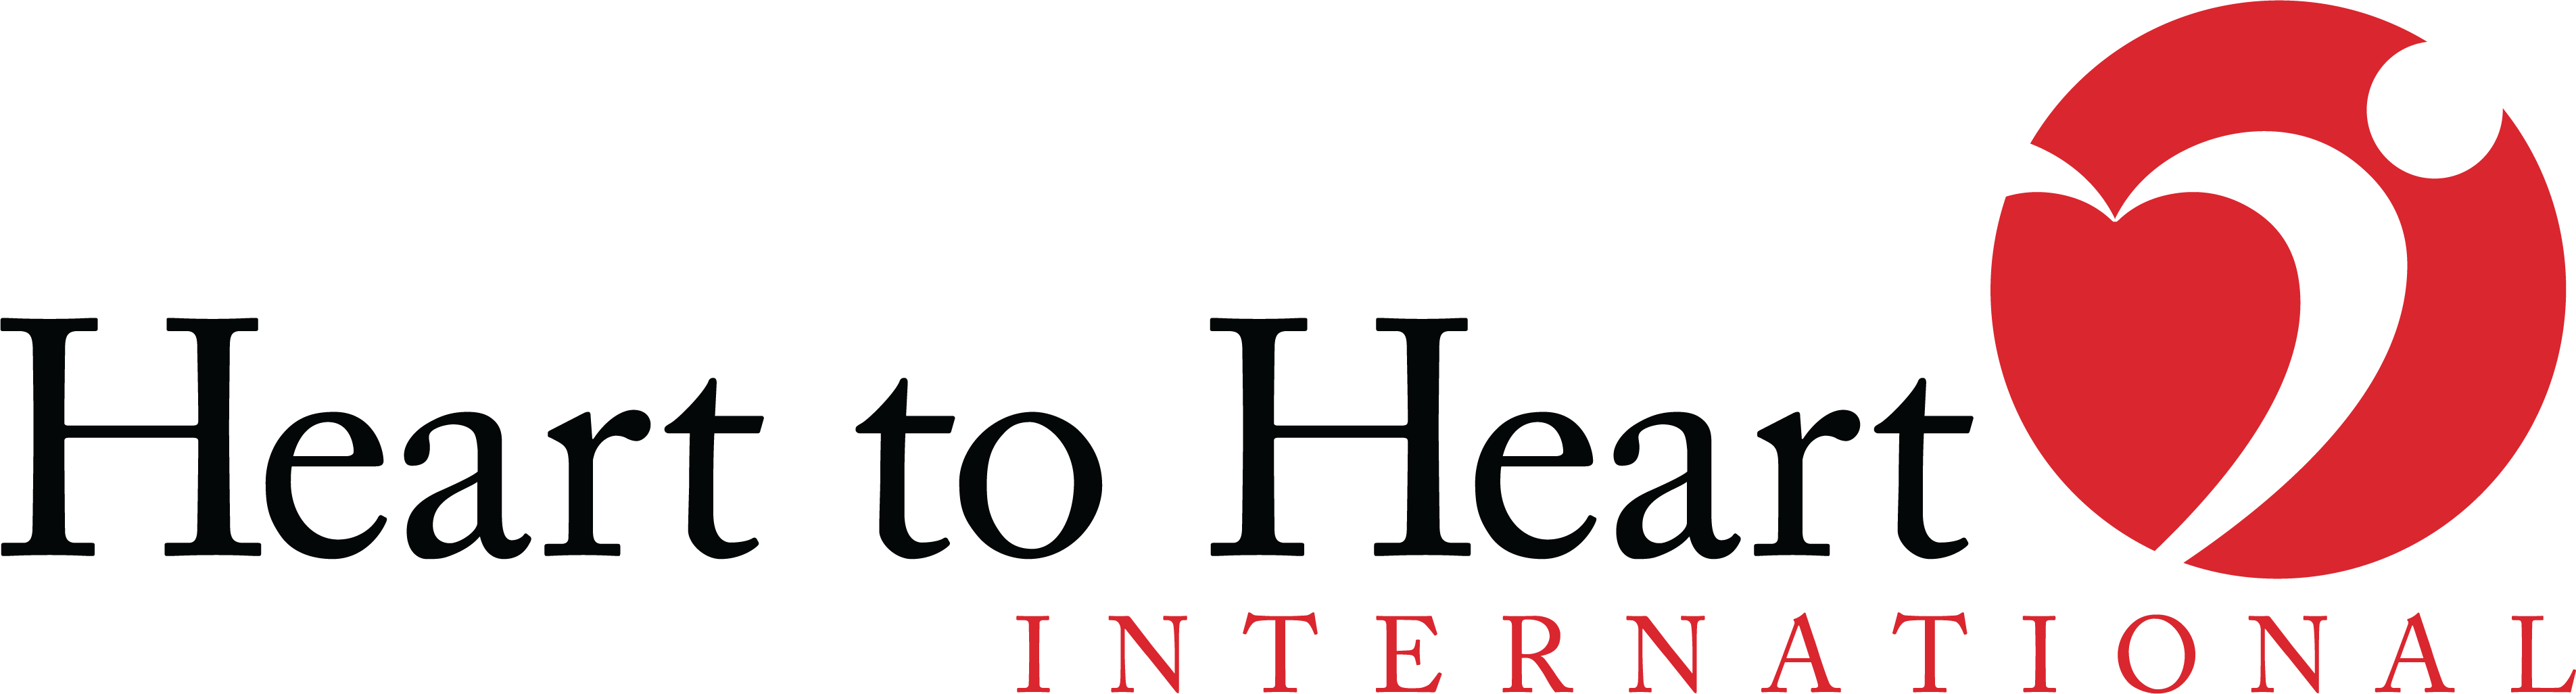 Heart to Heart International Disaster Response Team Application